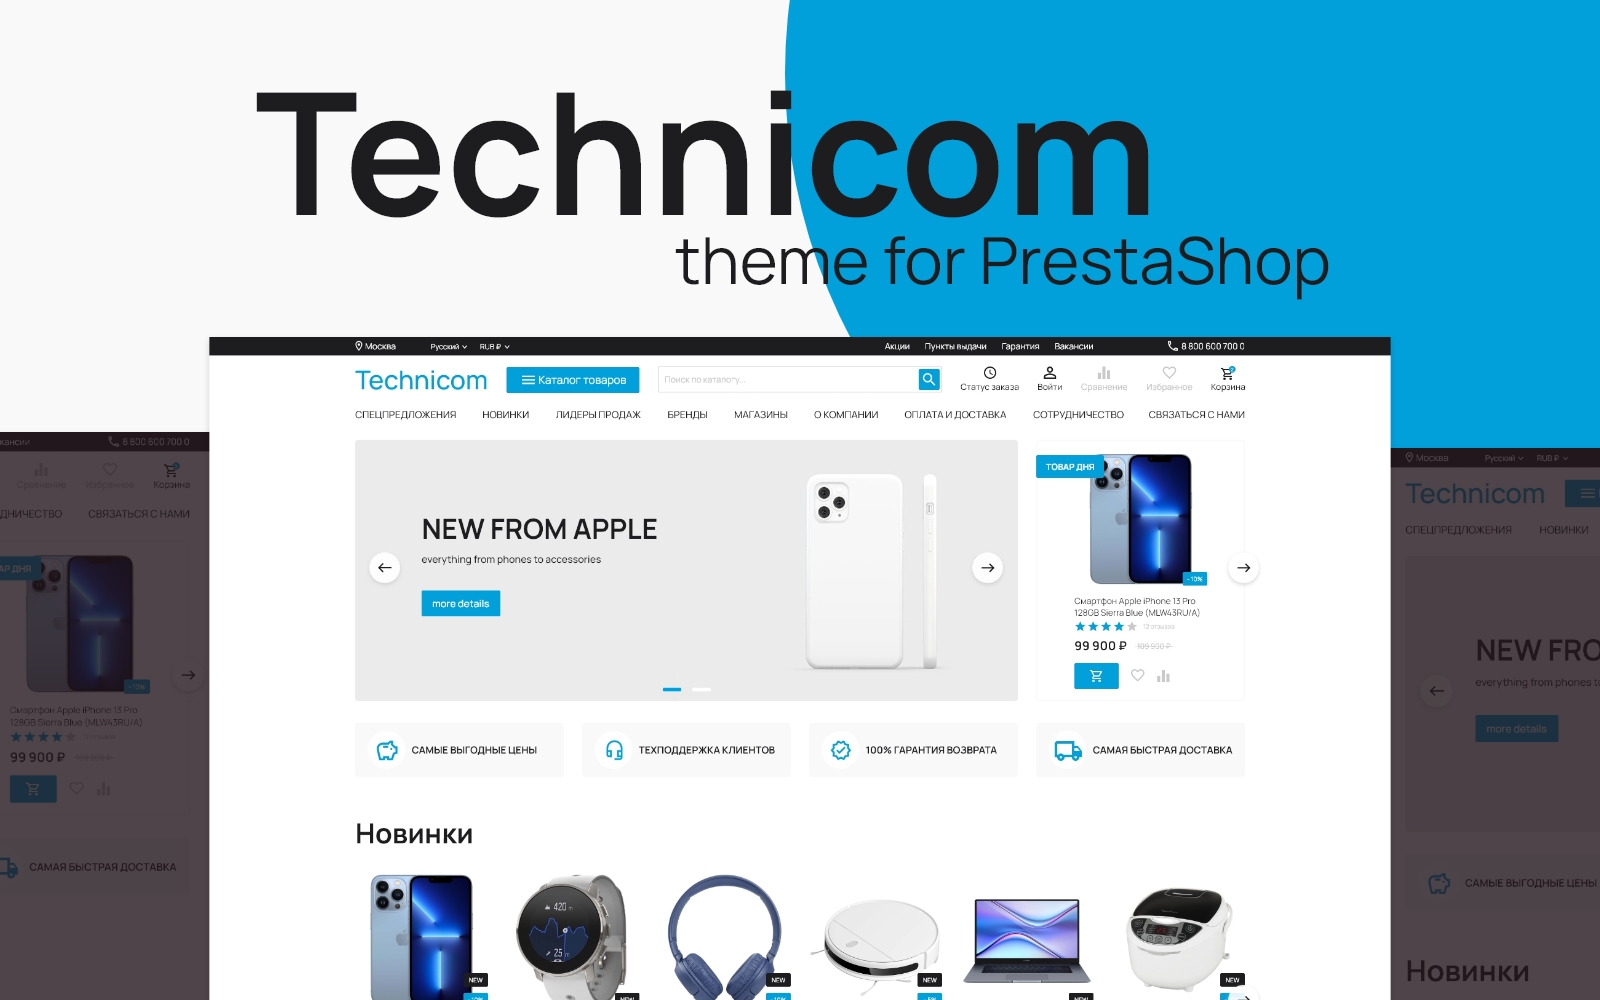 Technicom - Theme for Appliance and Electronics Stores on CMS PrestaShop